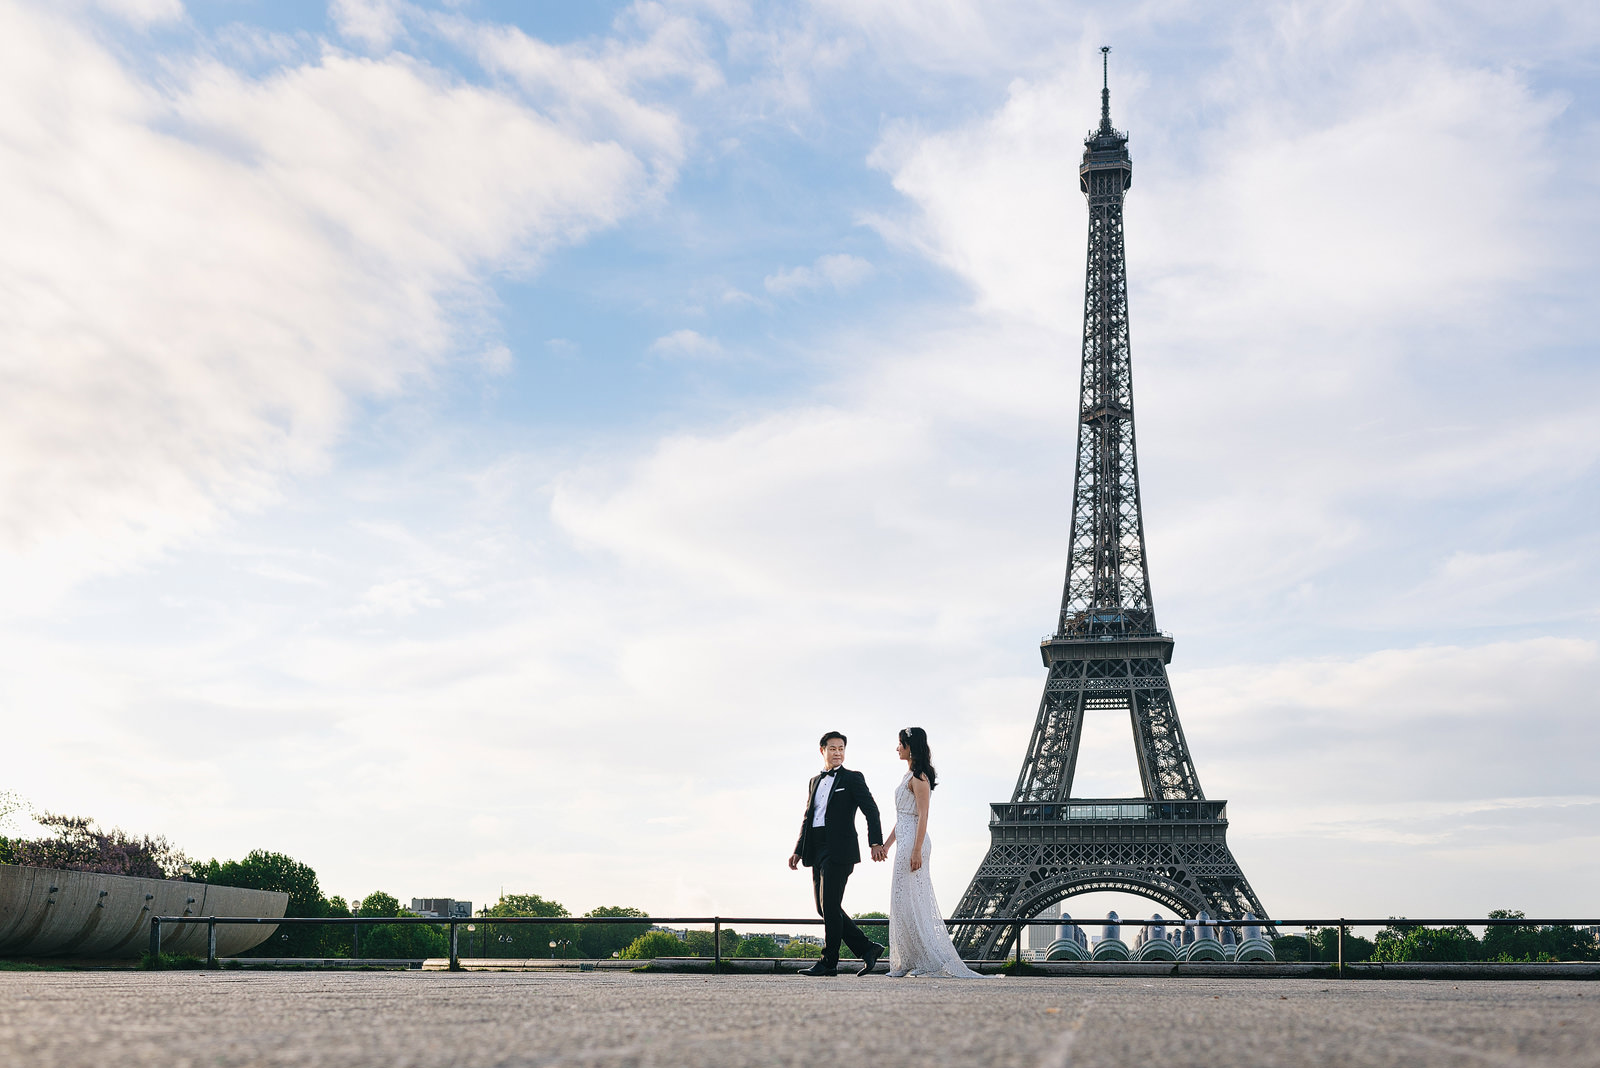 Pre-wedding shoot in Paris. Couple walking past the Eiffel Tower.